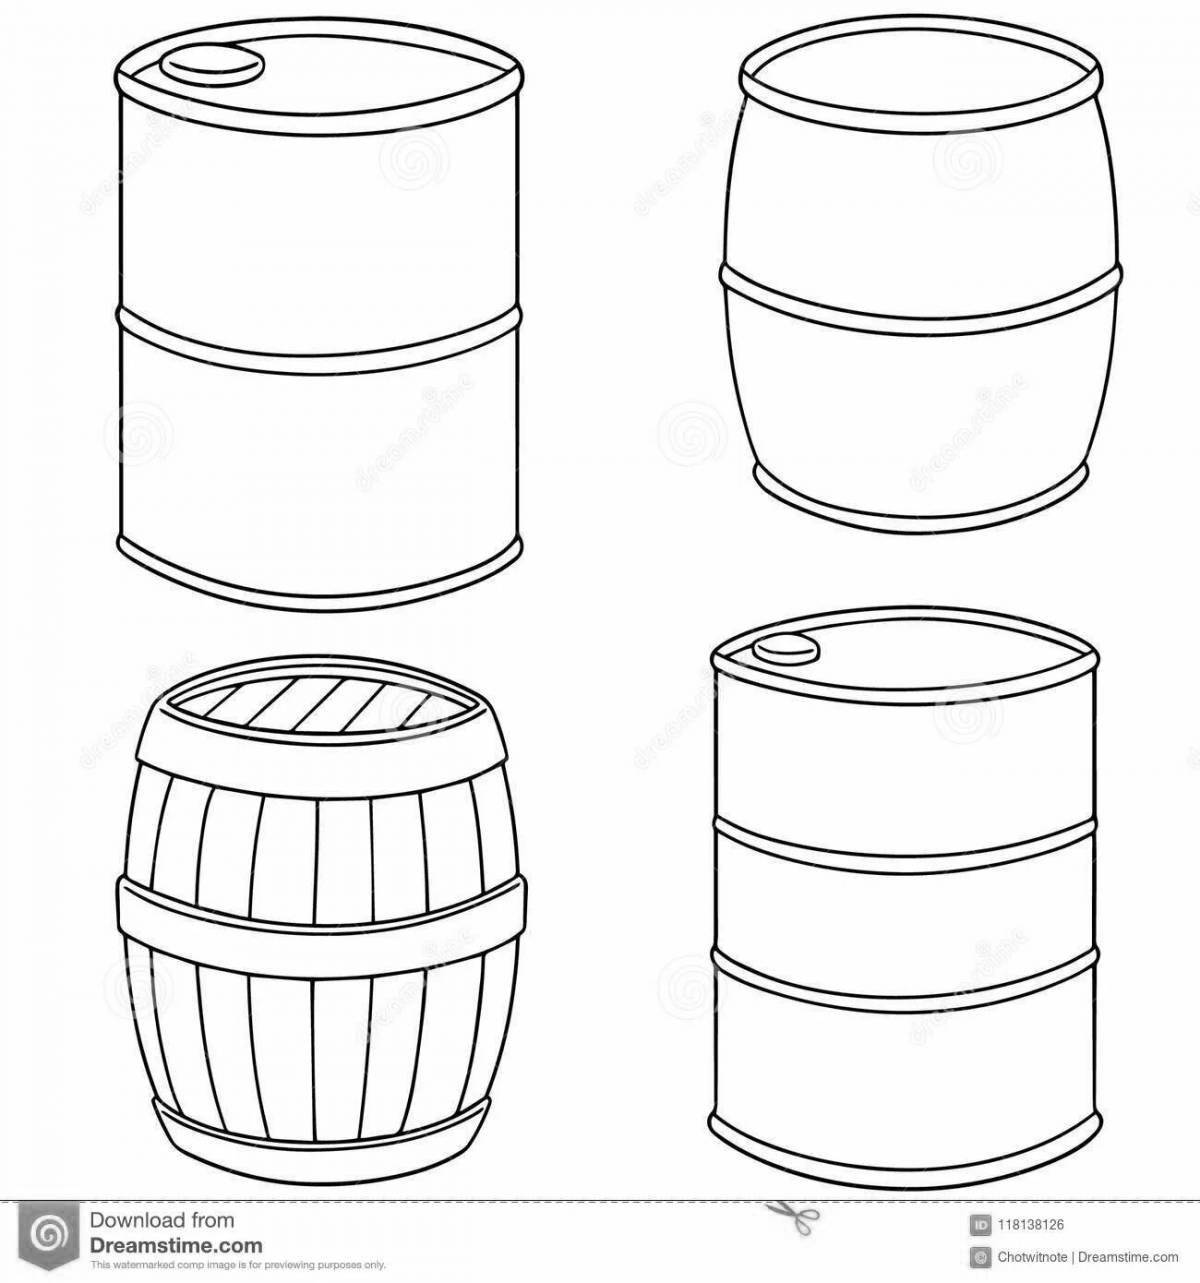 Coloring soda barrel for kids